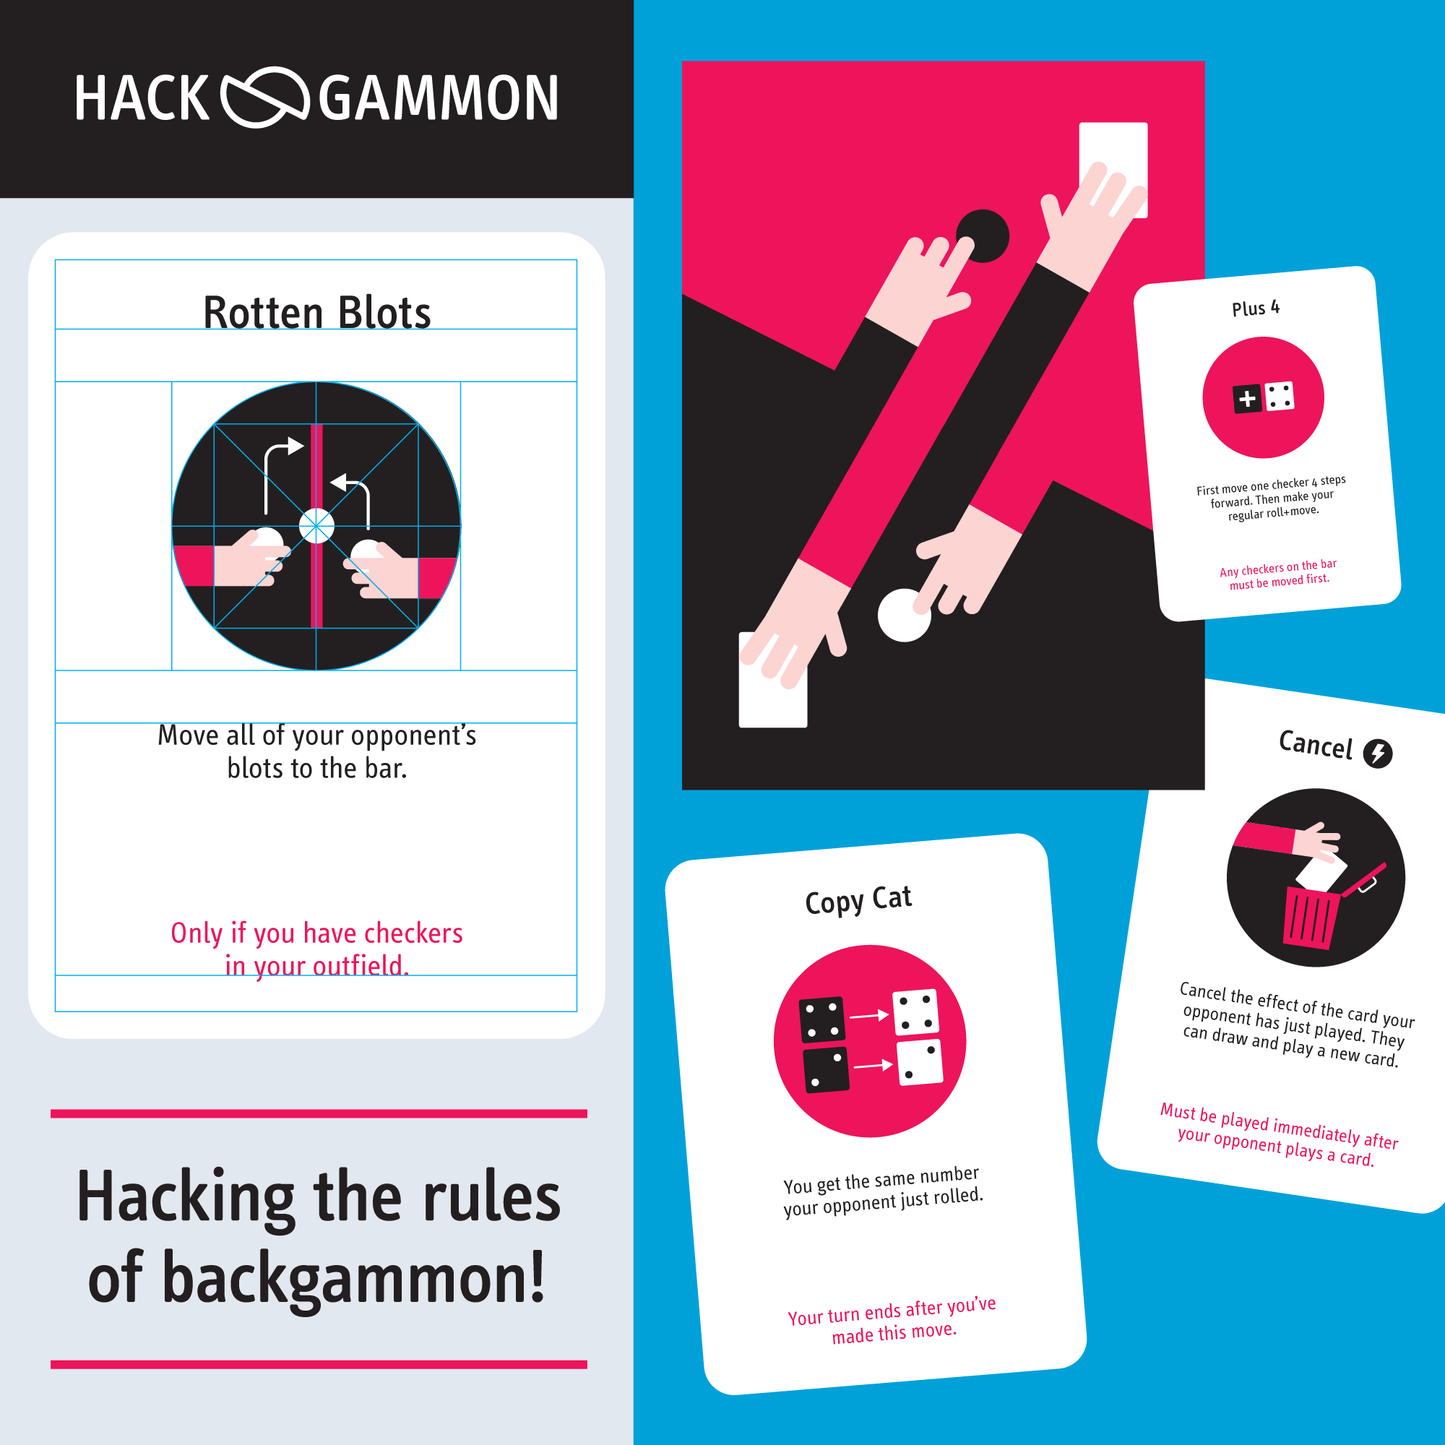 Hackgammon - Hacking the Rules of Backgammon!